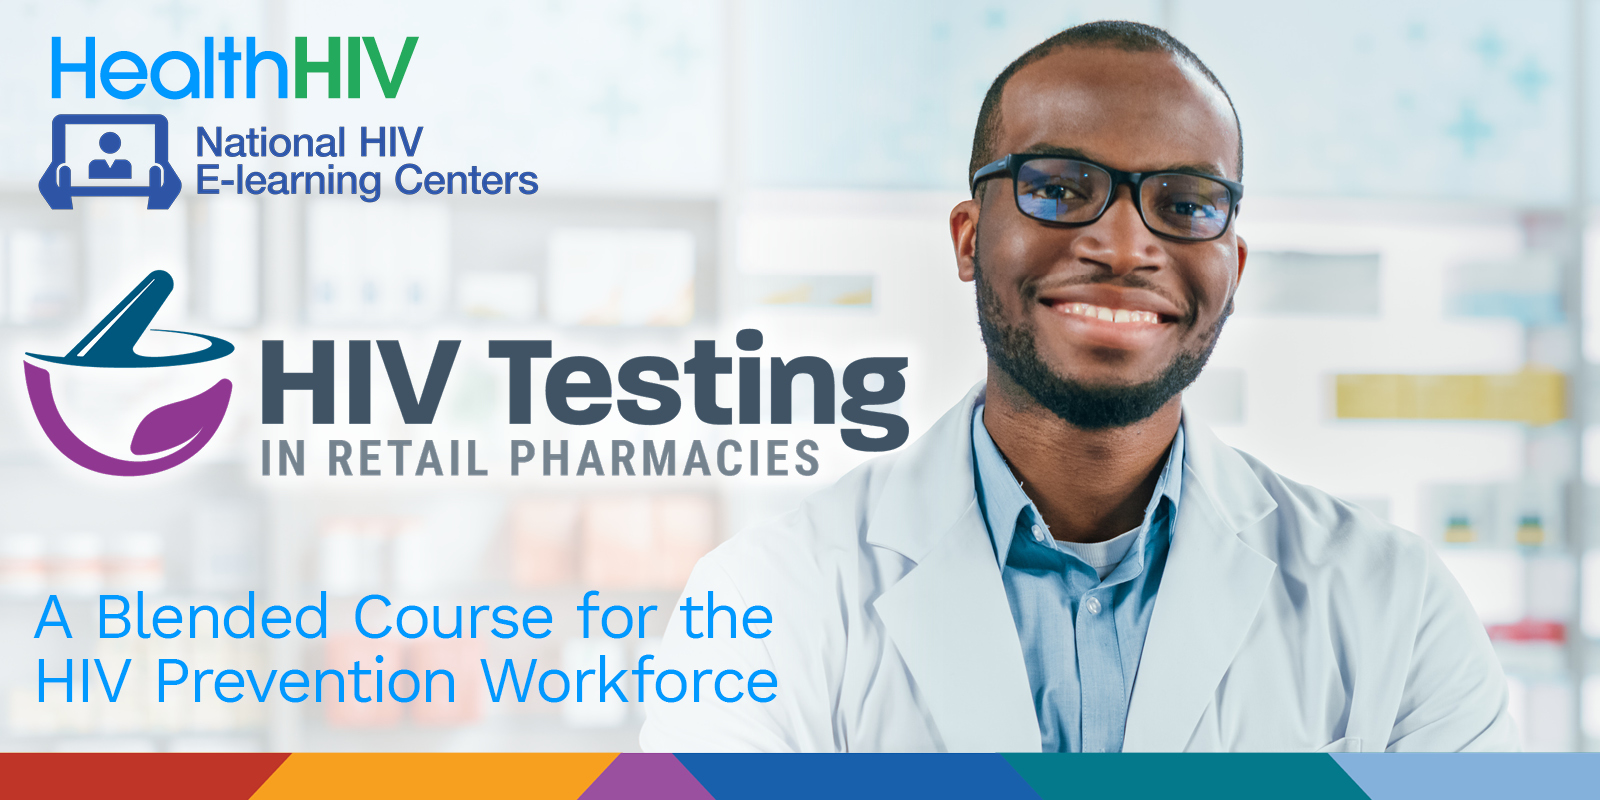 HIV Testing in Retail Pharmacies